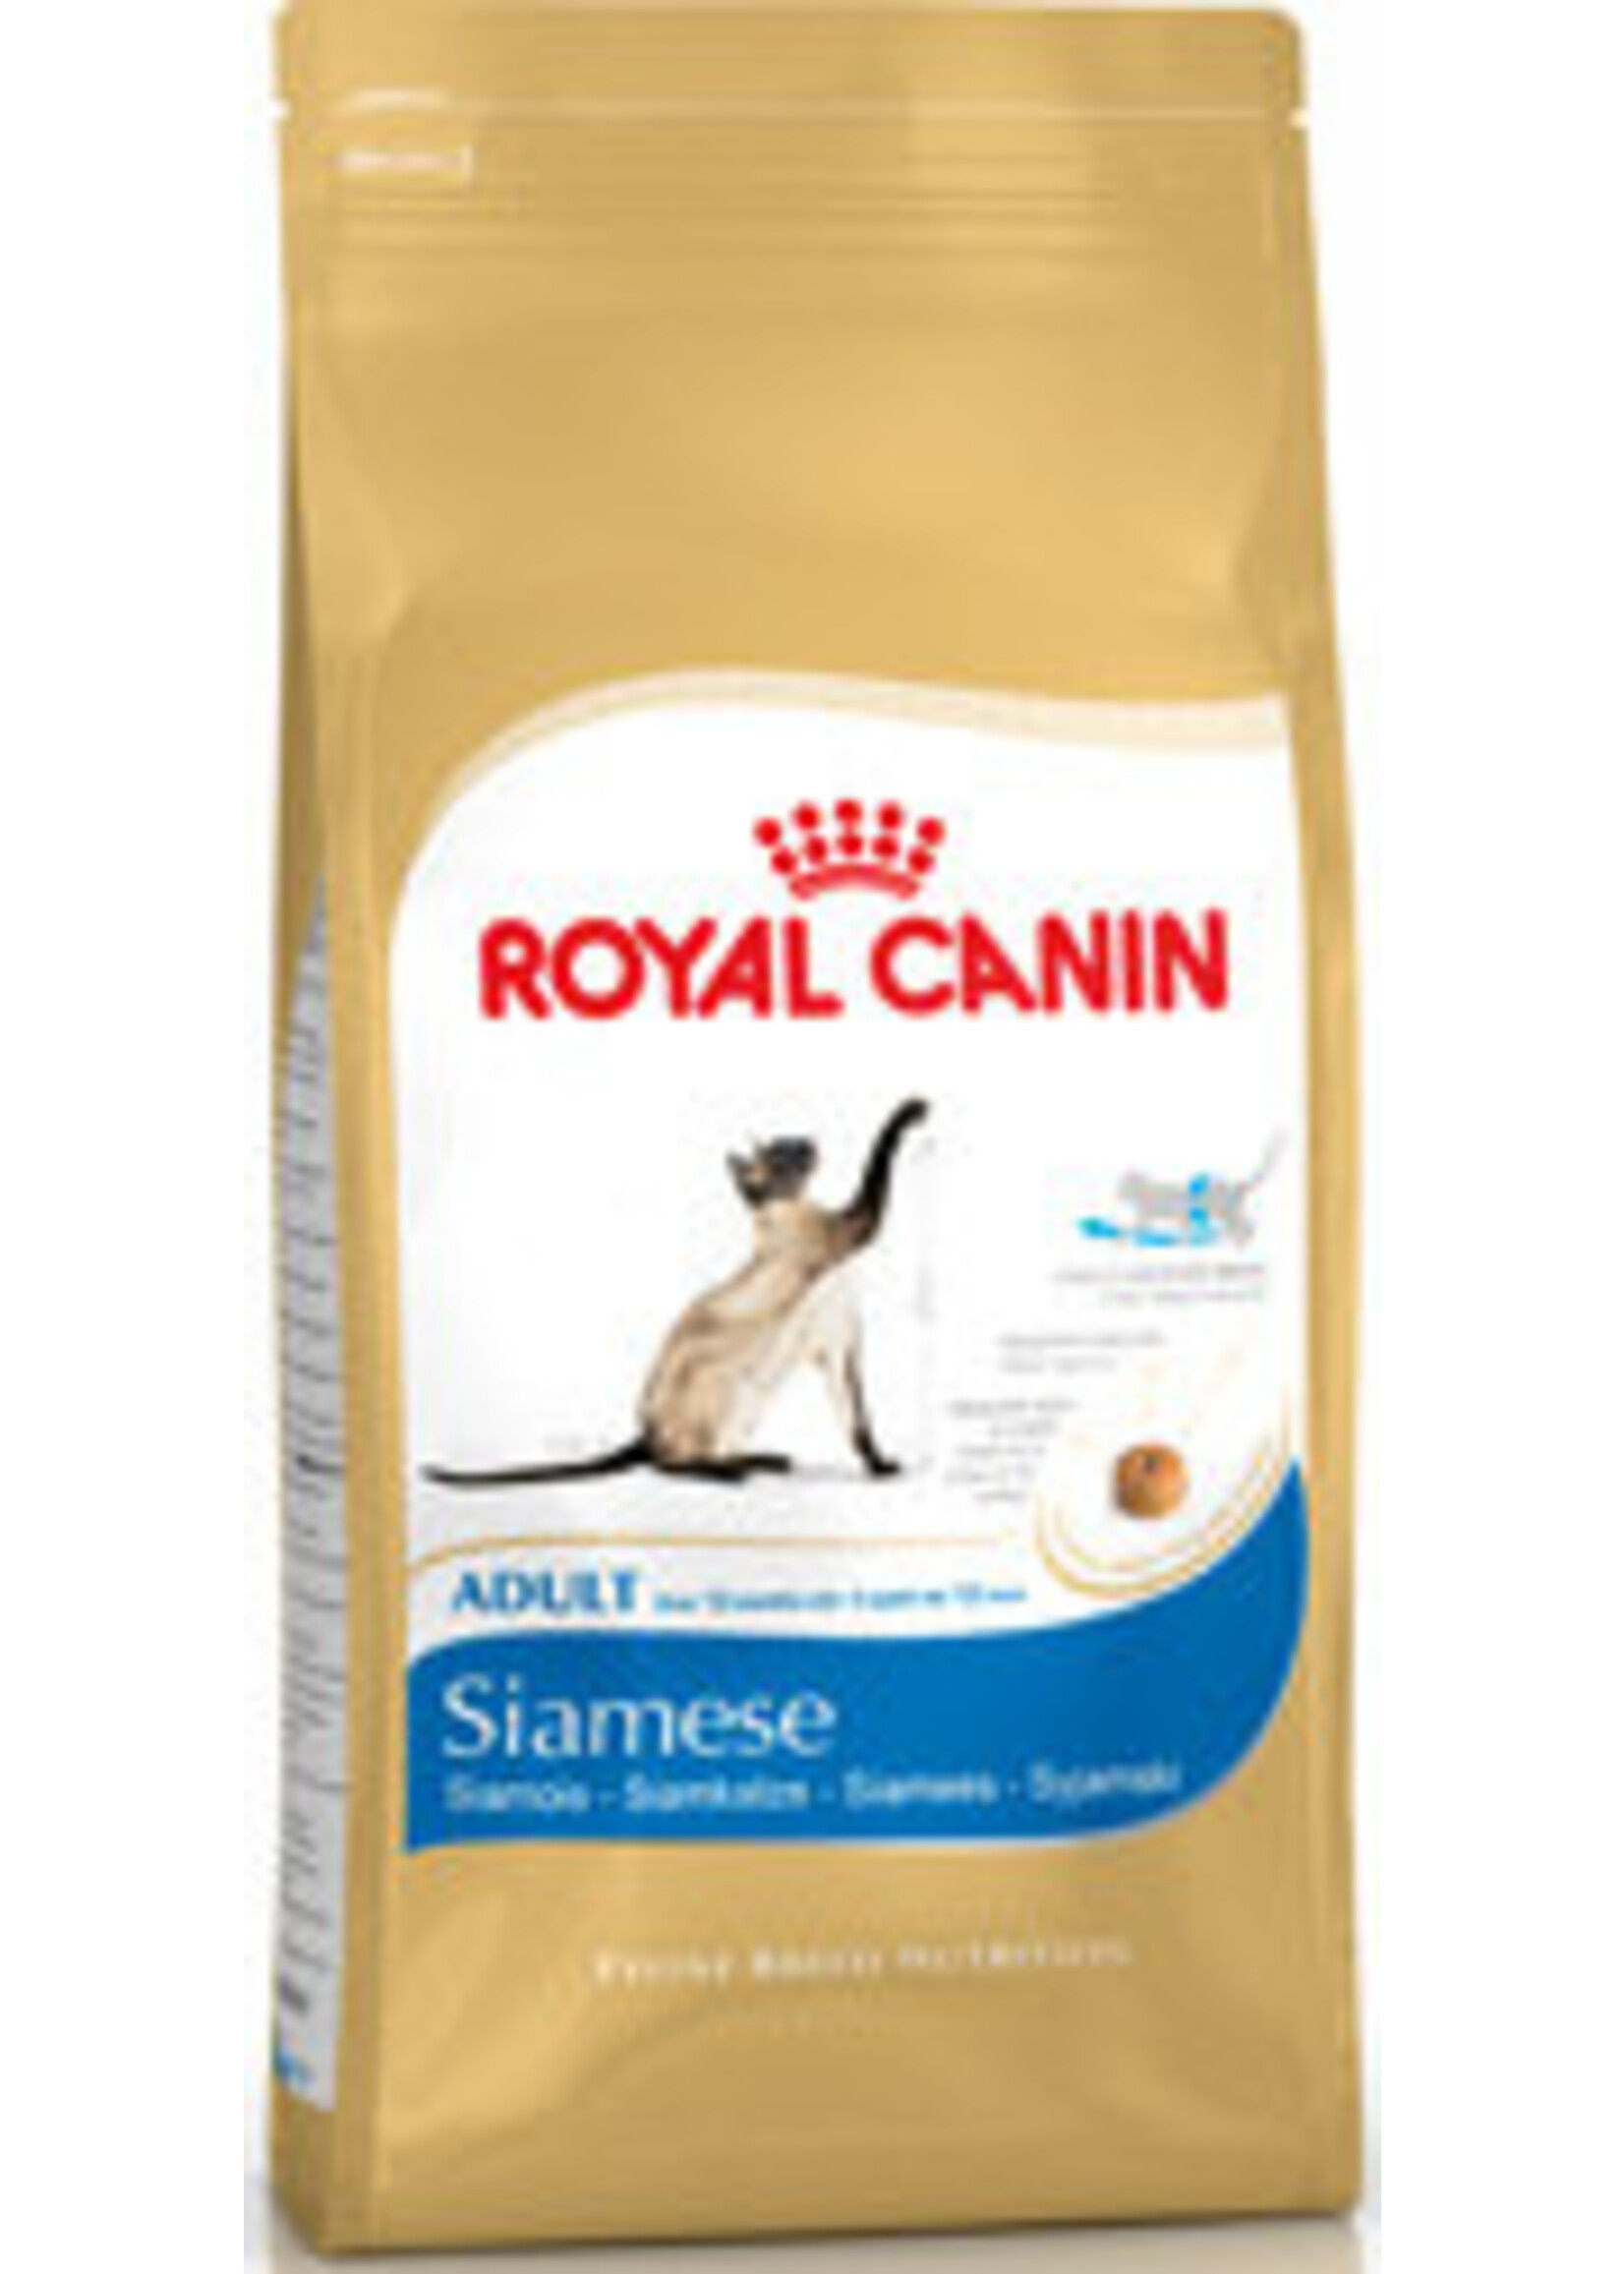 Royal Canin Royal Canin Fbn Siamese 38 4kg